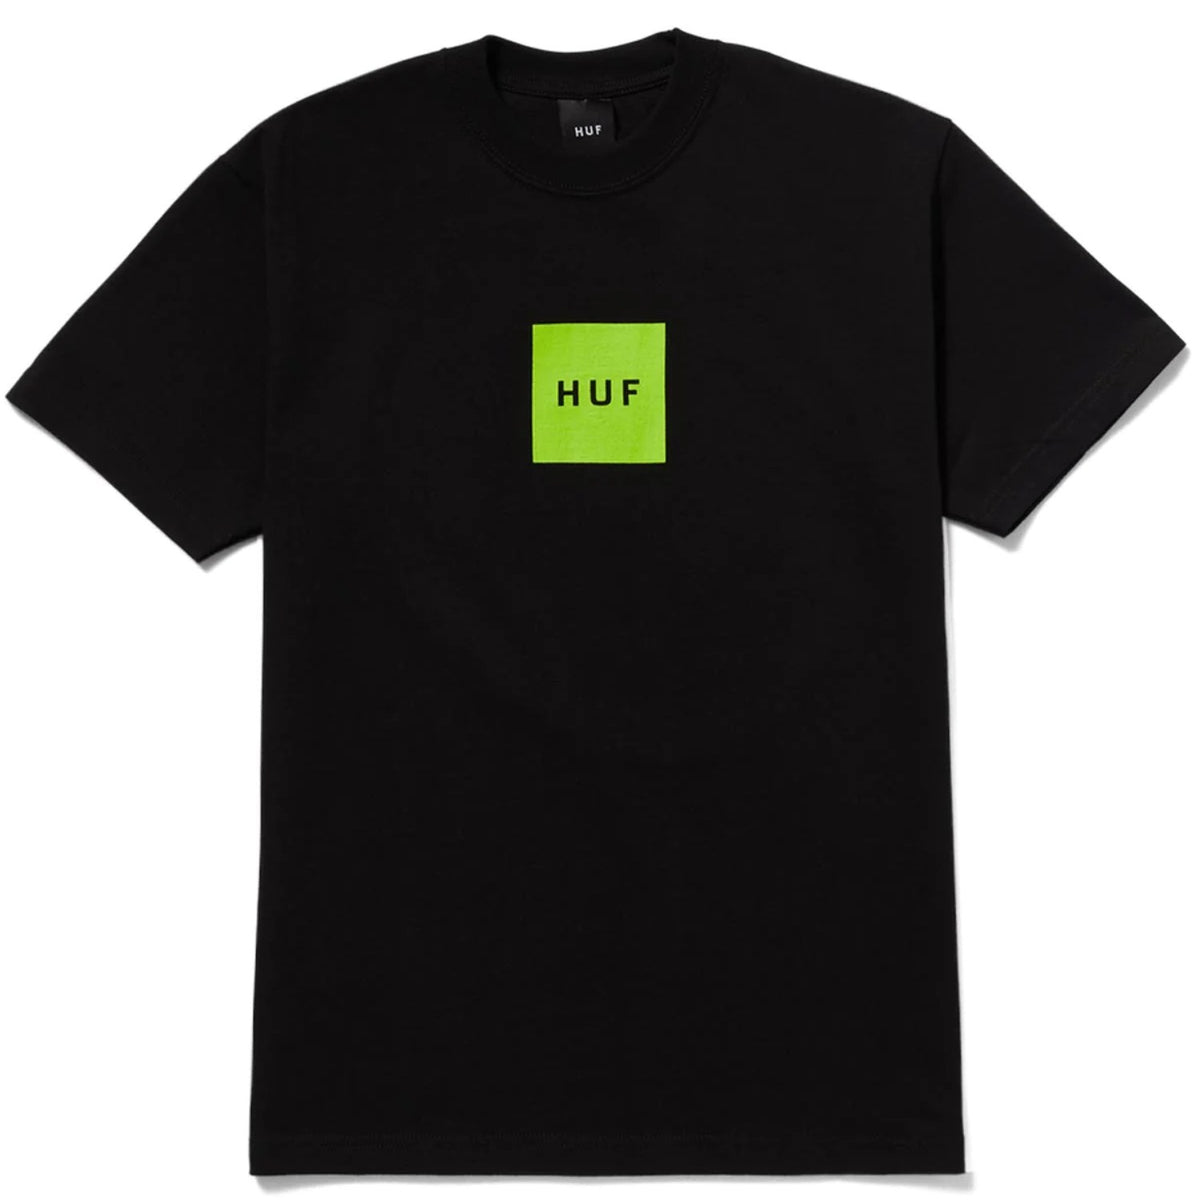 HUF - Set Box Short-Sleeve Tee - Black